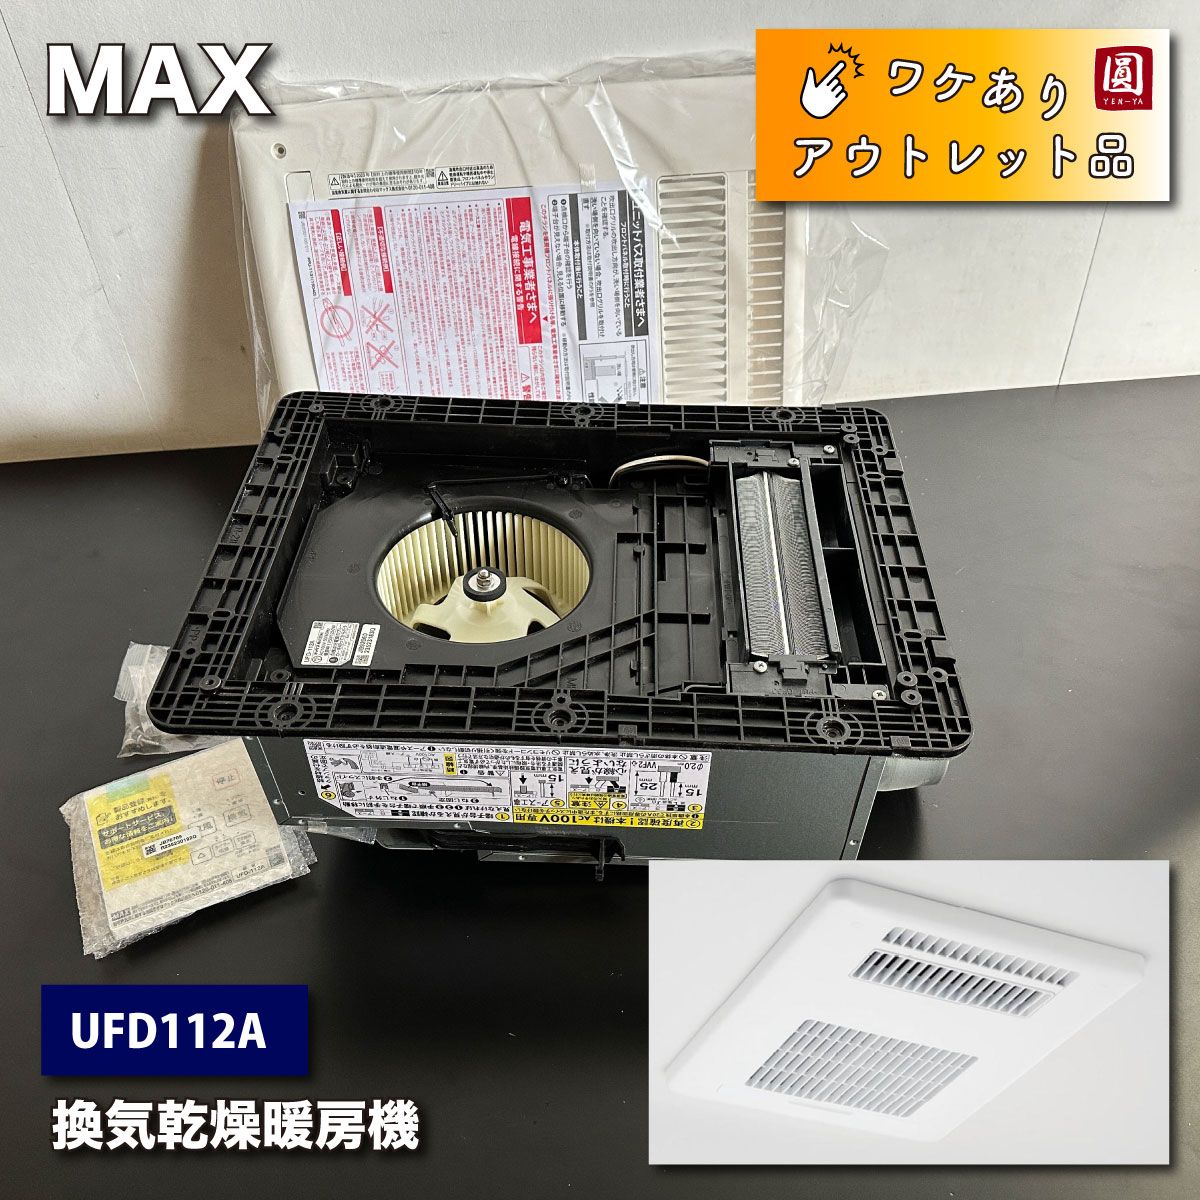 MAX 換気乾燥暖房機 UFD-112A - その他